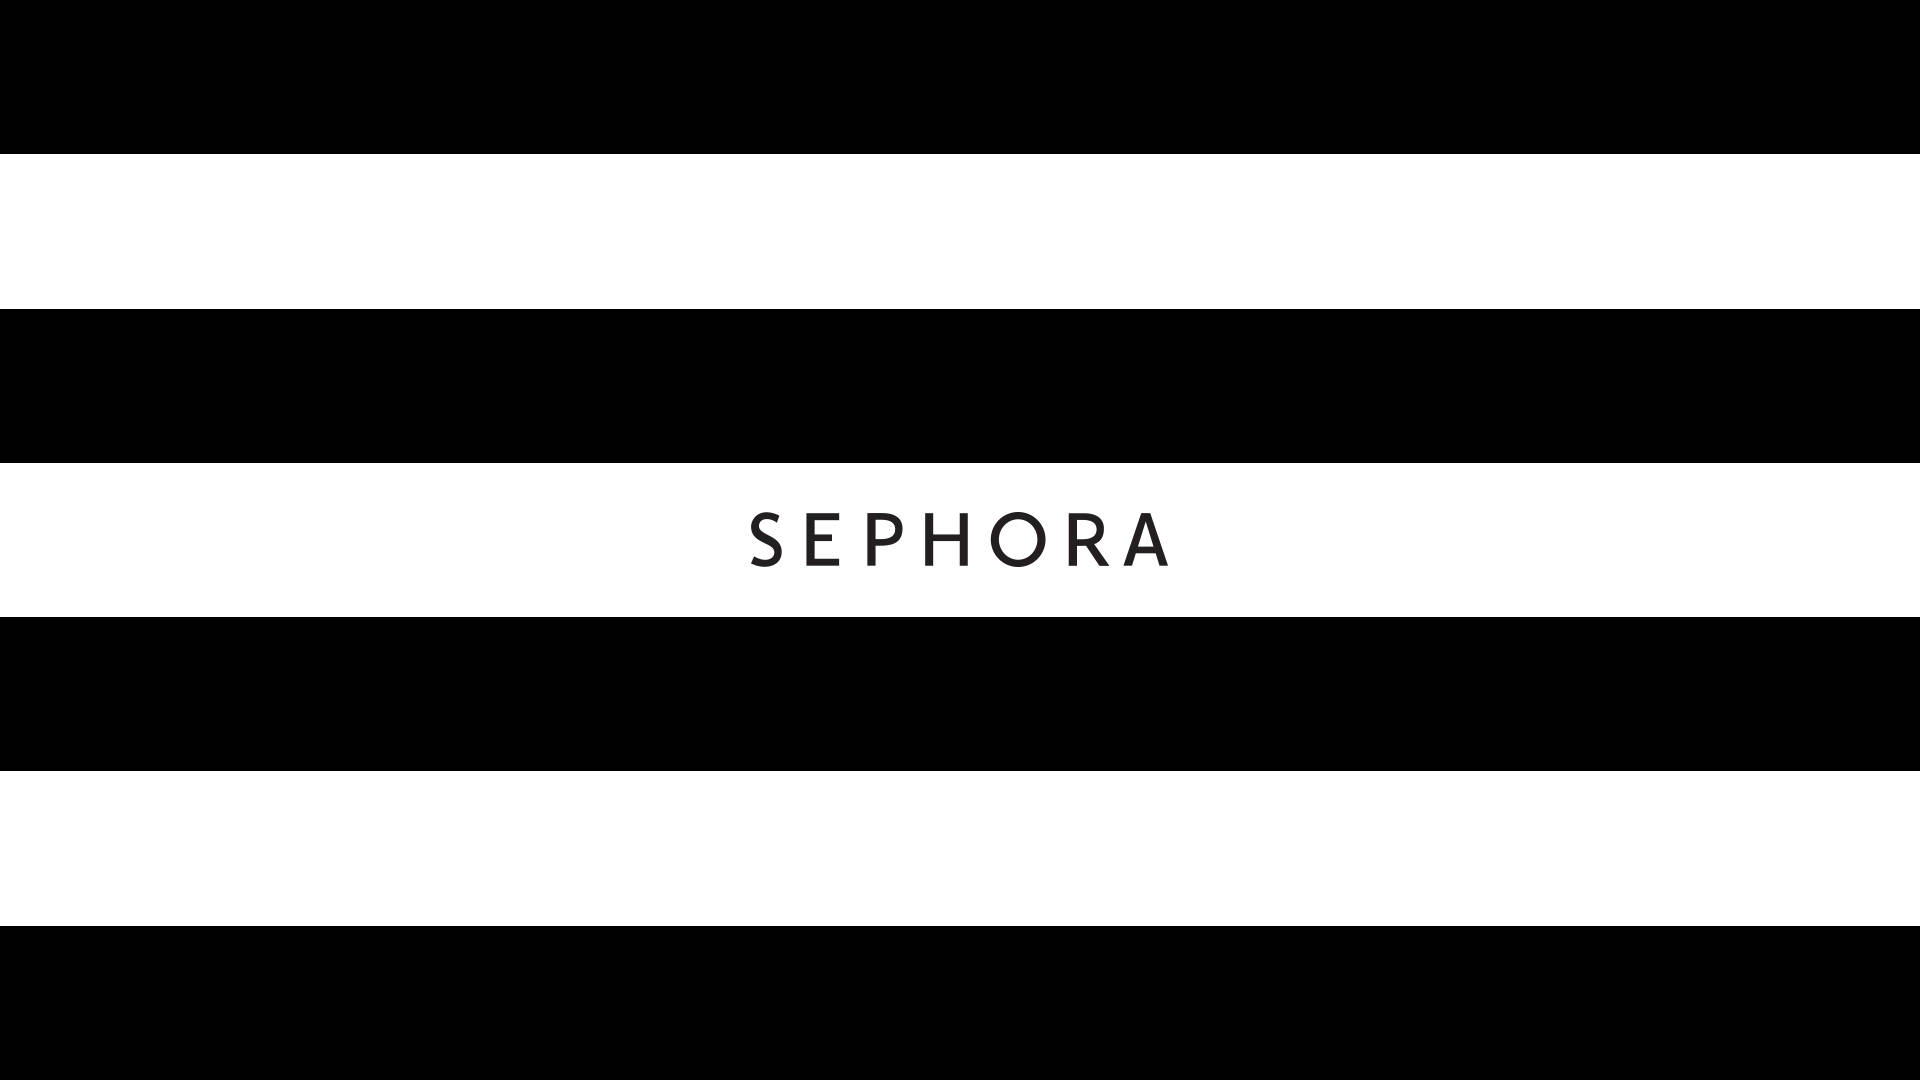 Sephora Stripes Brand Wallpaper